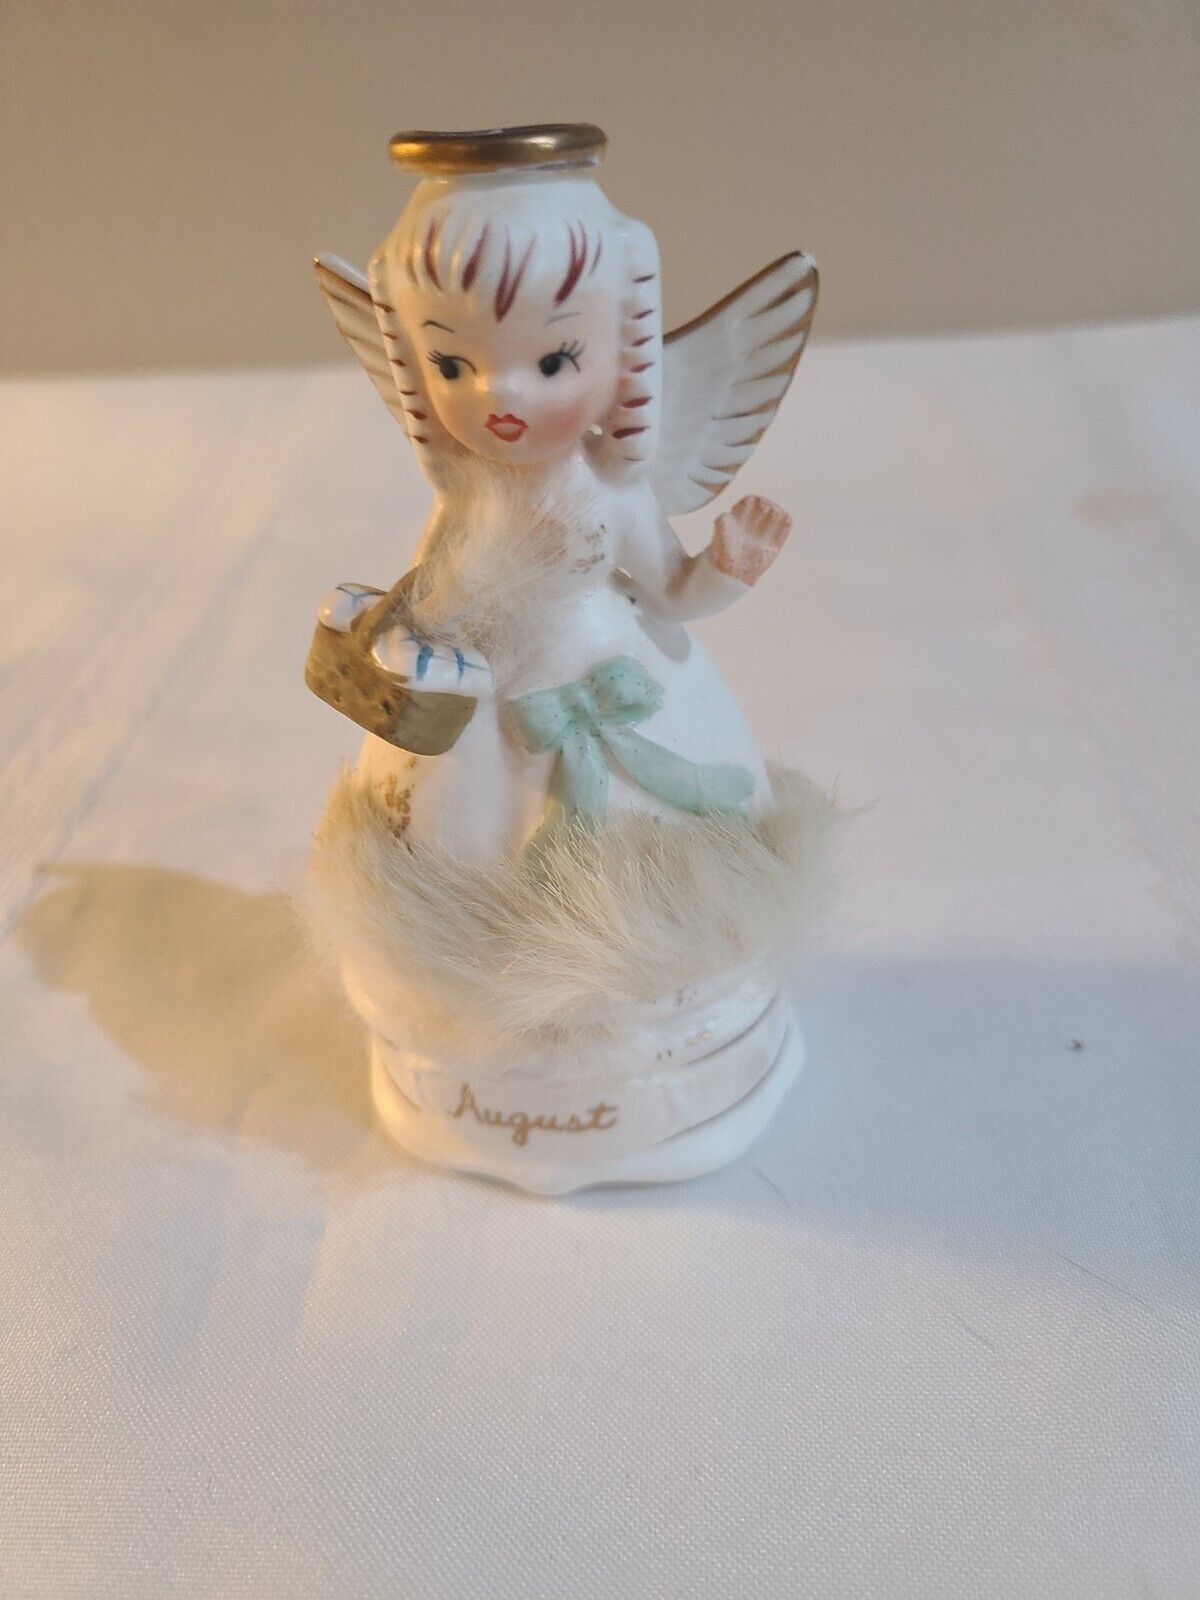 Vintage August Angel Birthday Figurine Fur Trim NAPCO Japan 1950s A4588